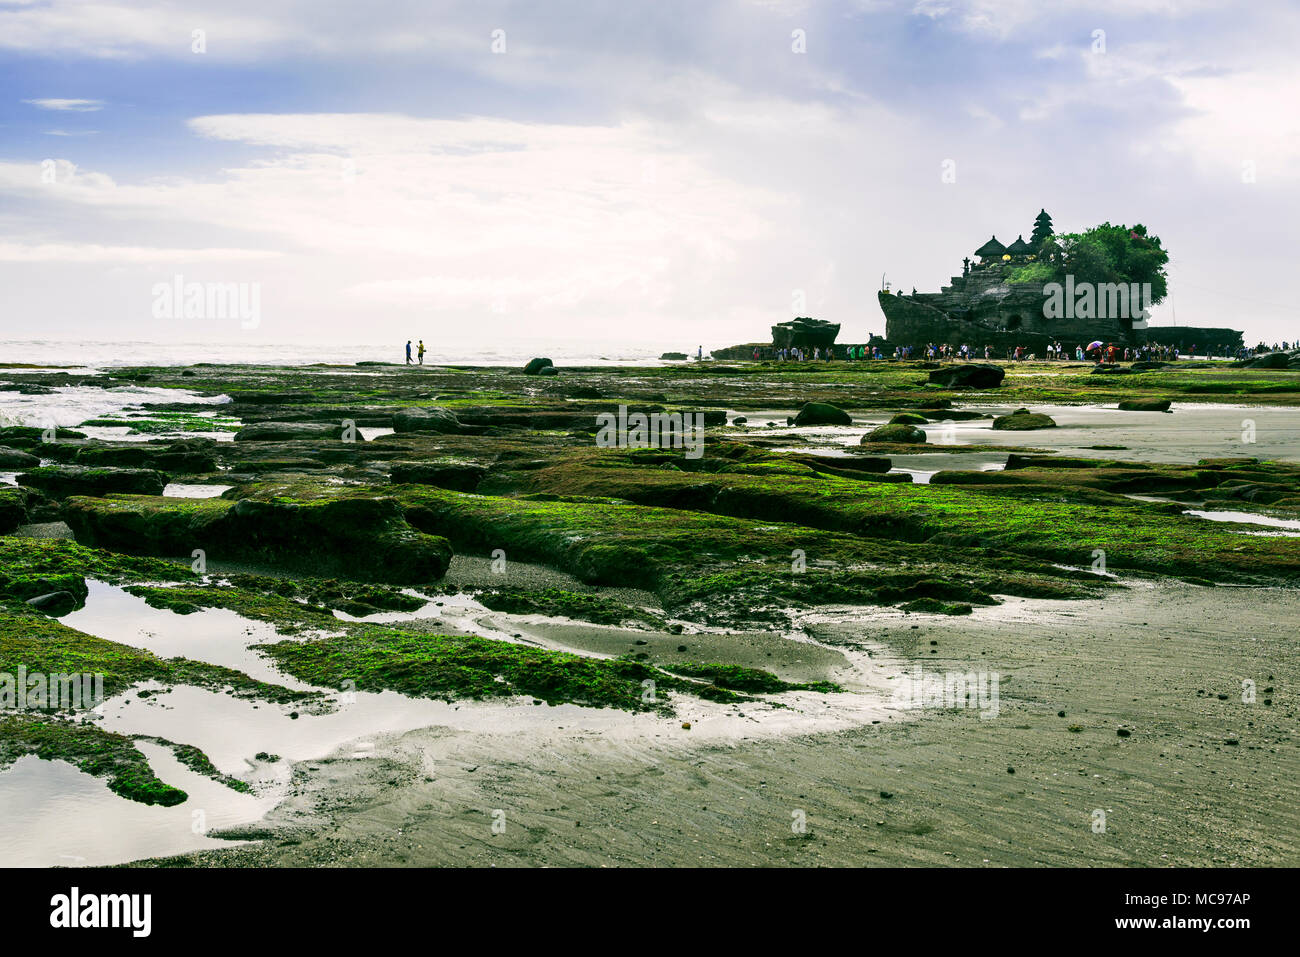 Landschaft mit Tanah Lot Tempel während ocean Tide bei Bali Indonesien. Stockfoto